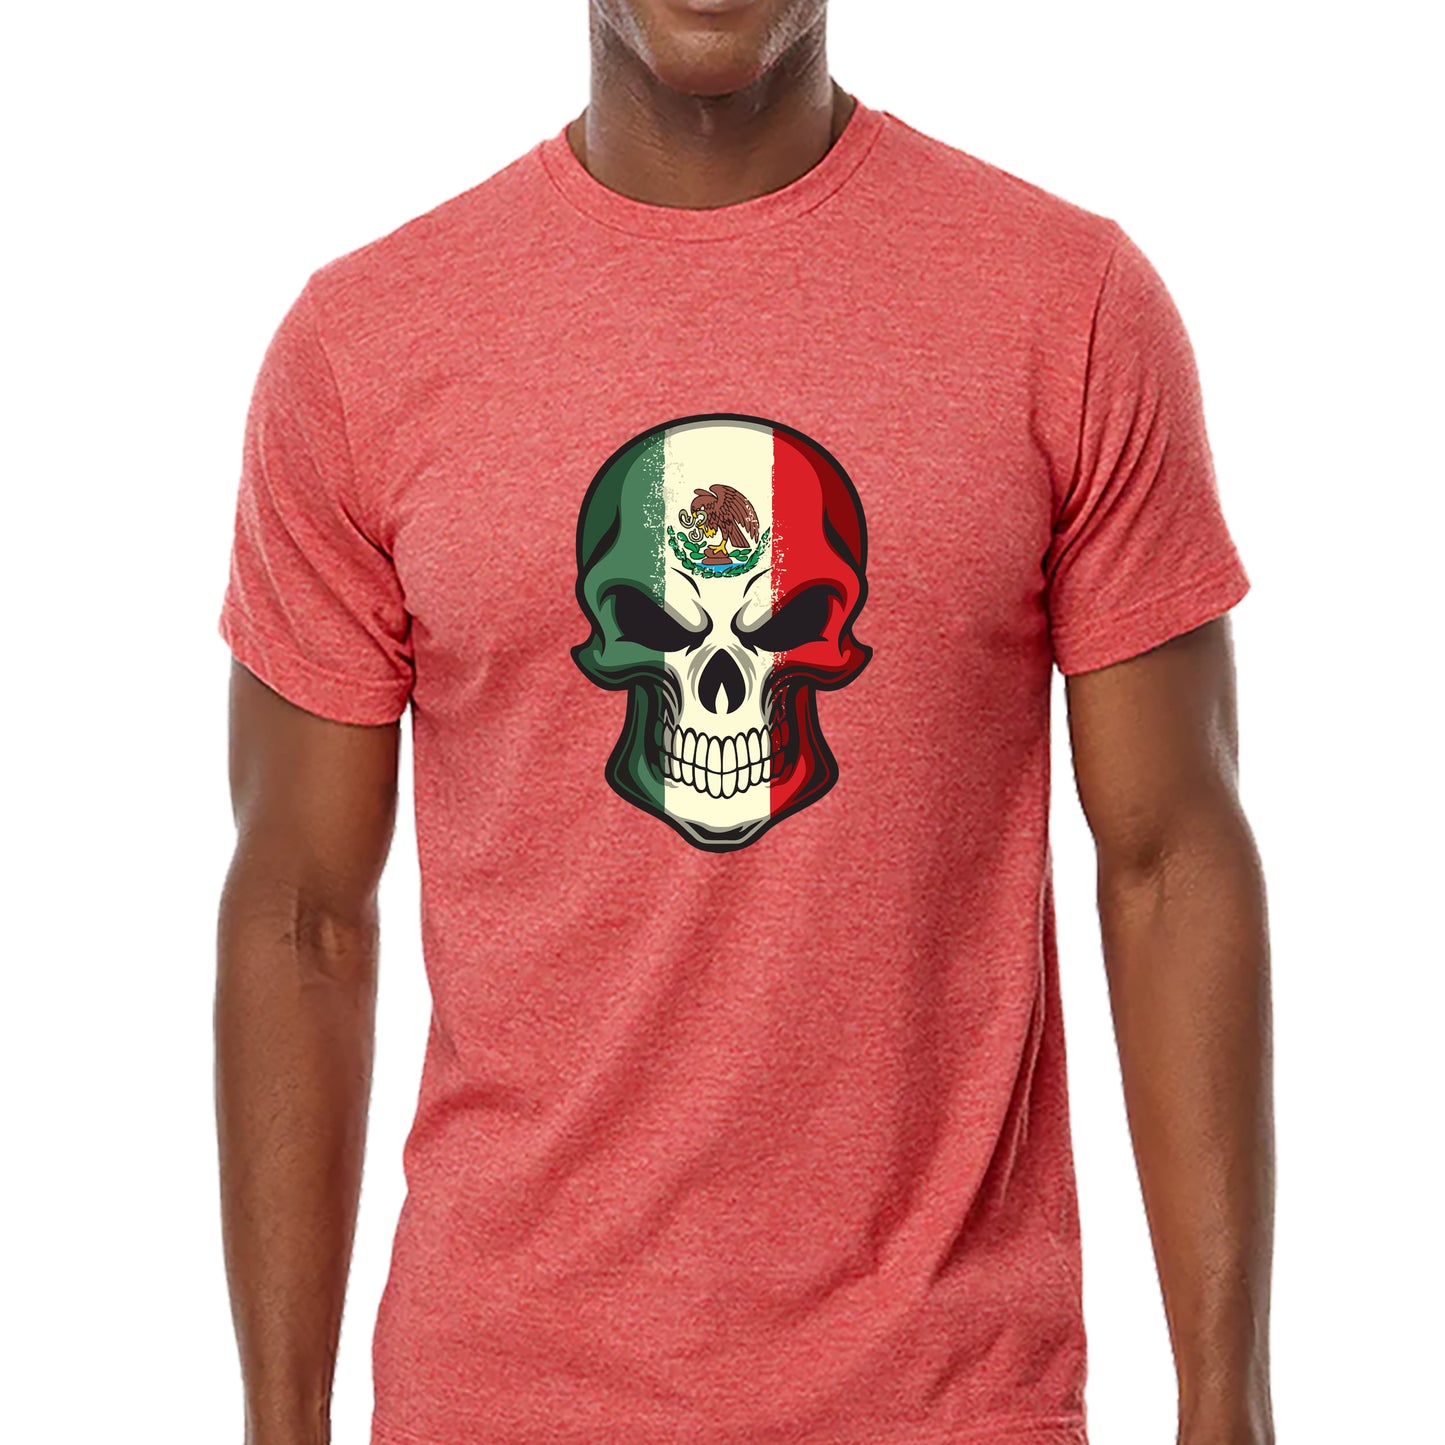 Bad Mexican Skull T-shirt